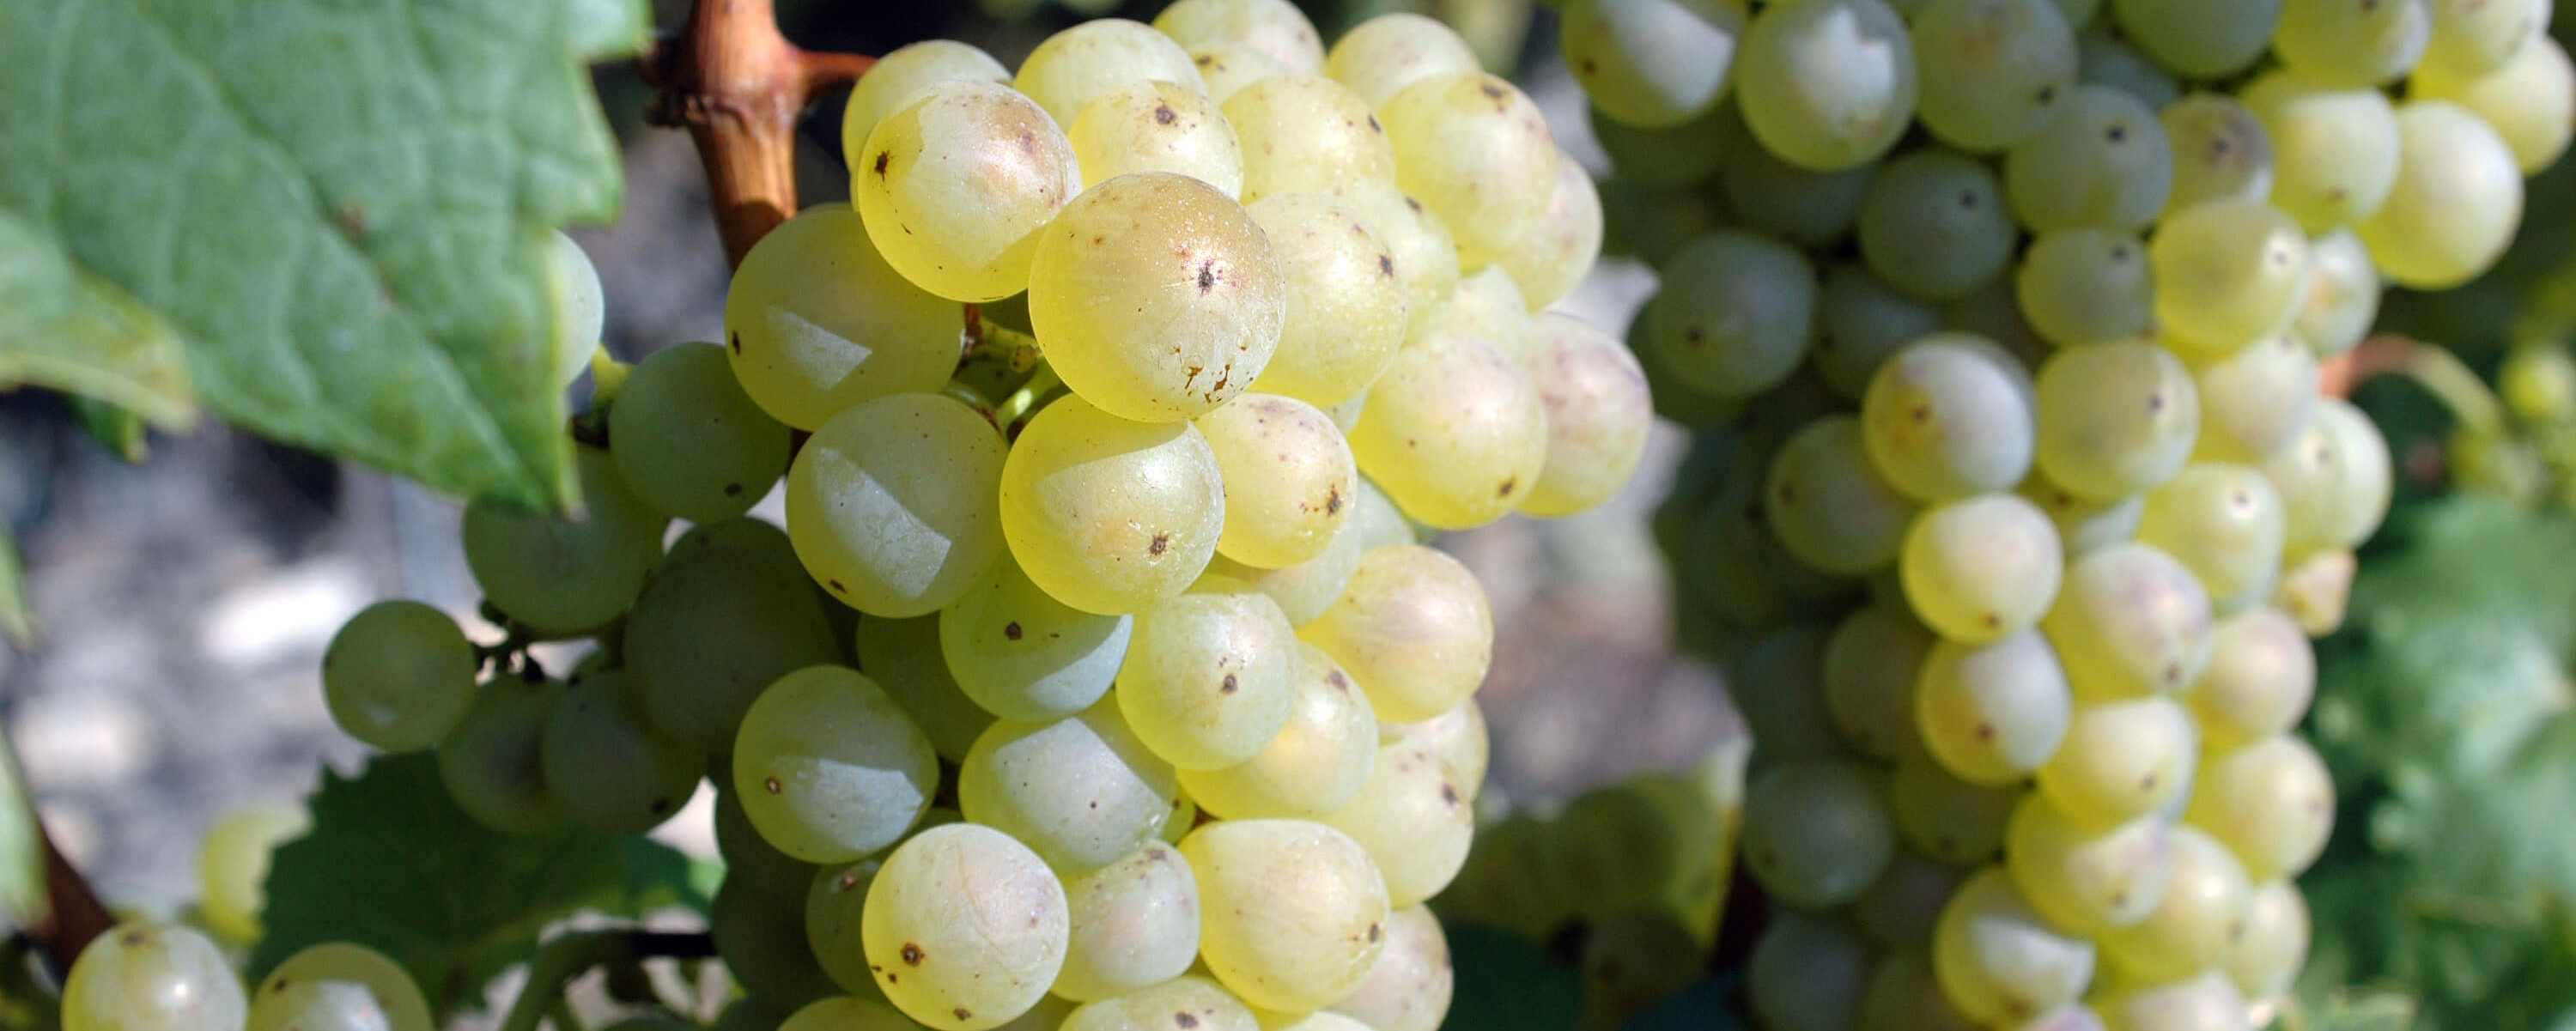 White wine grapes on vine